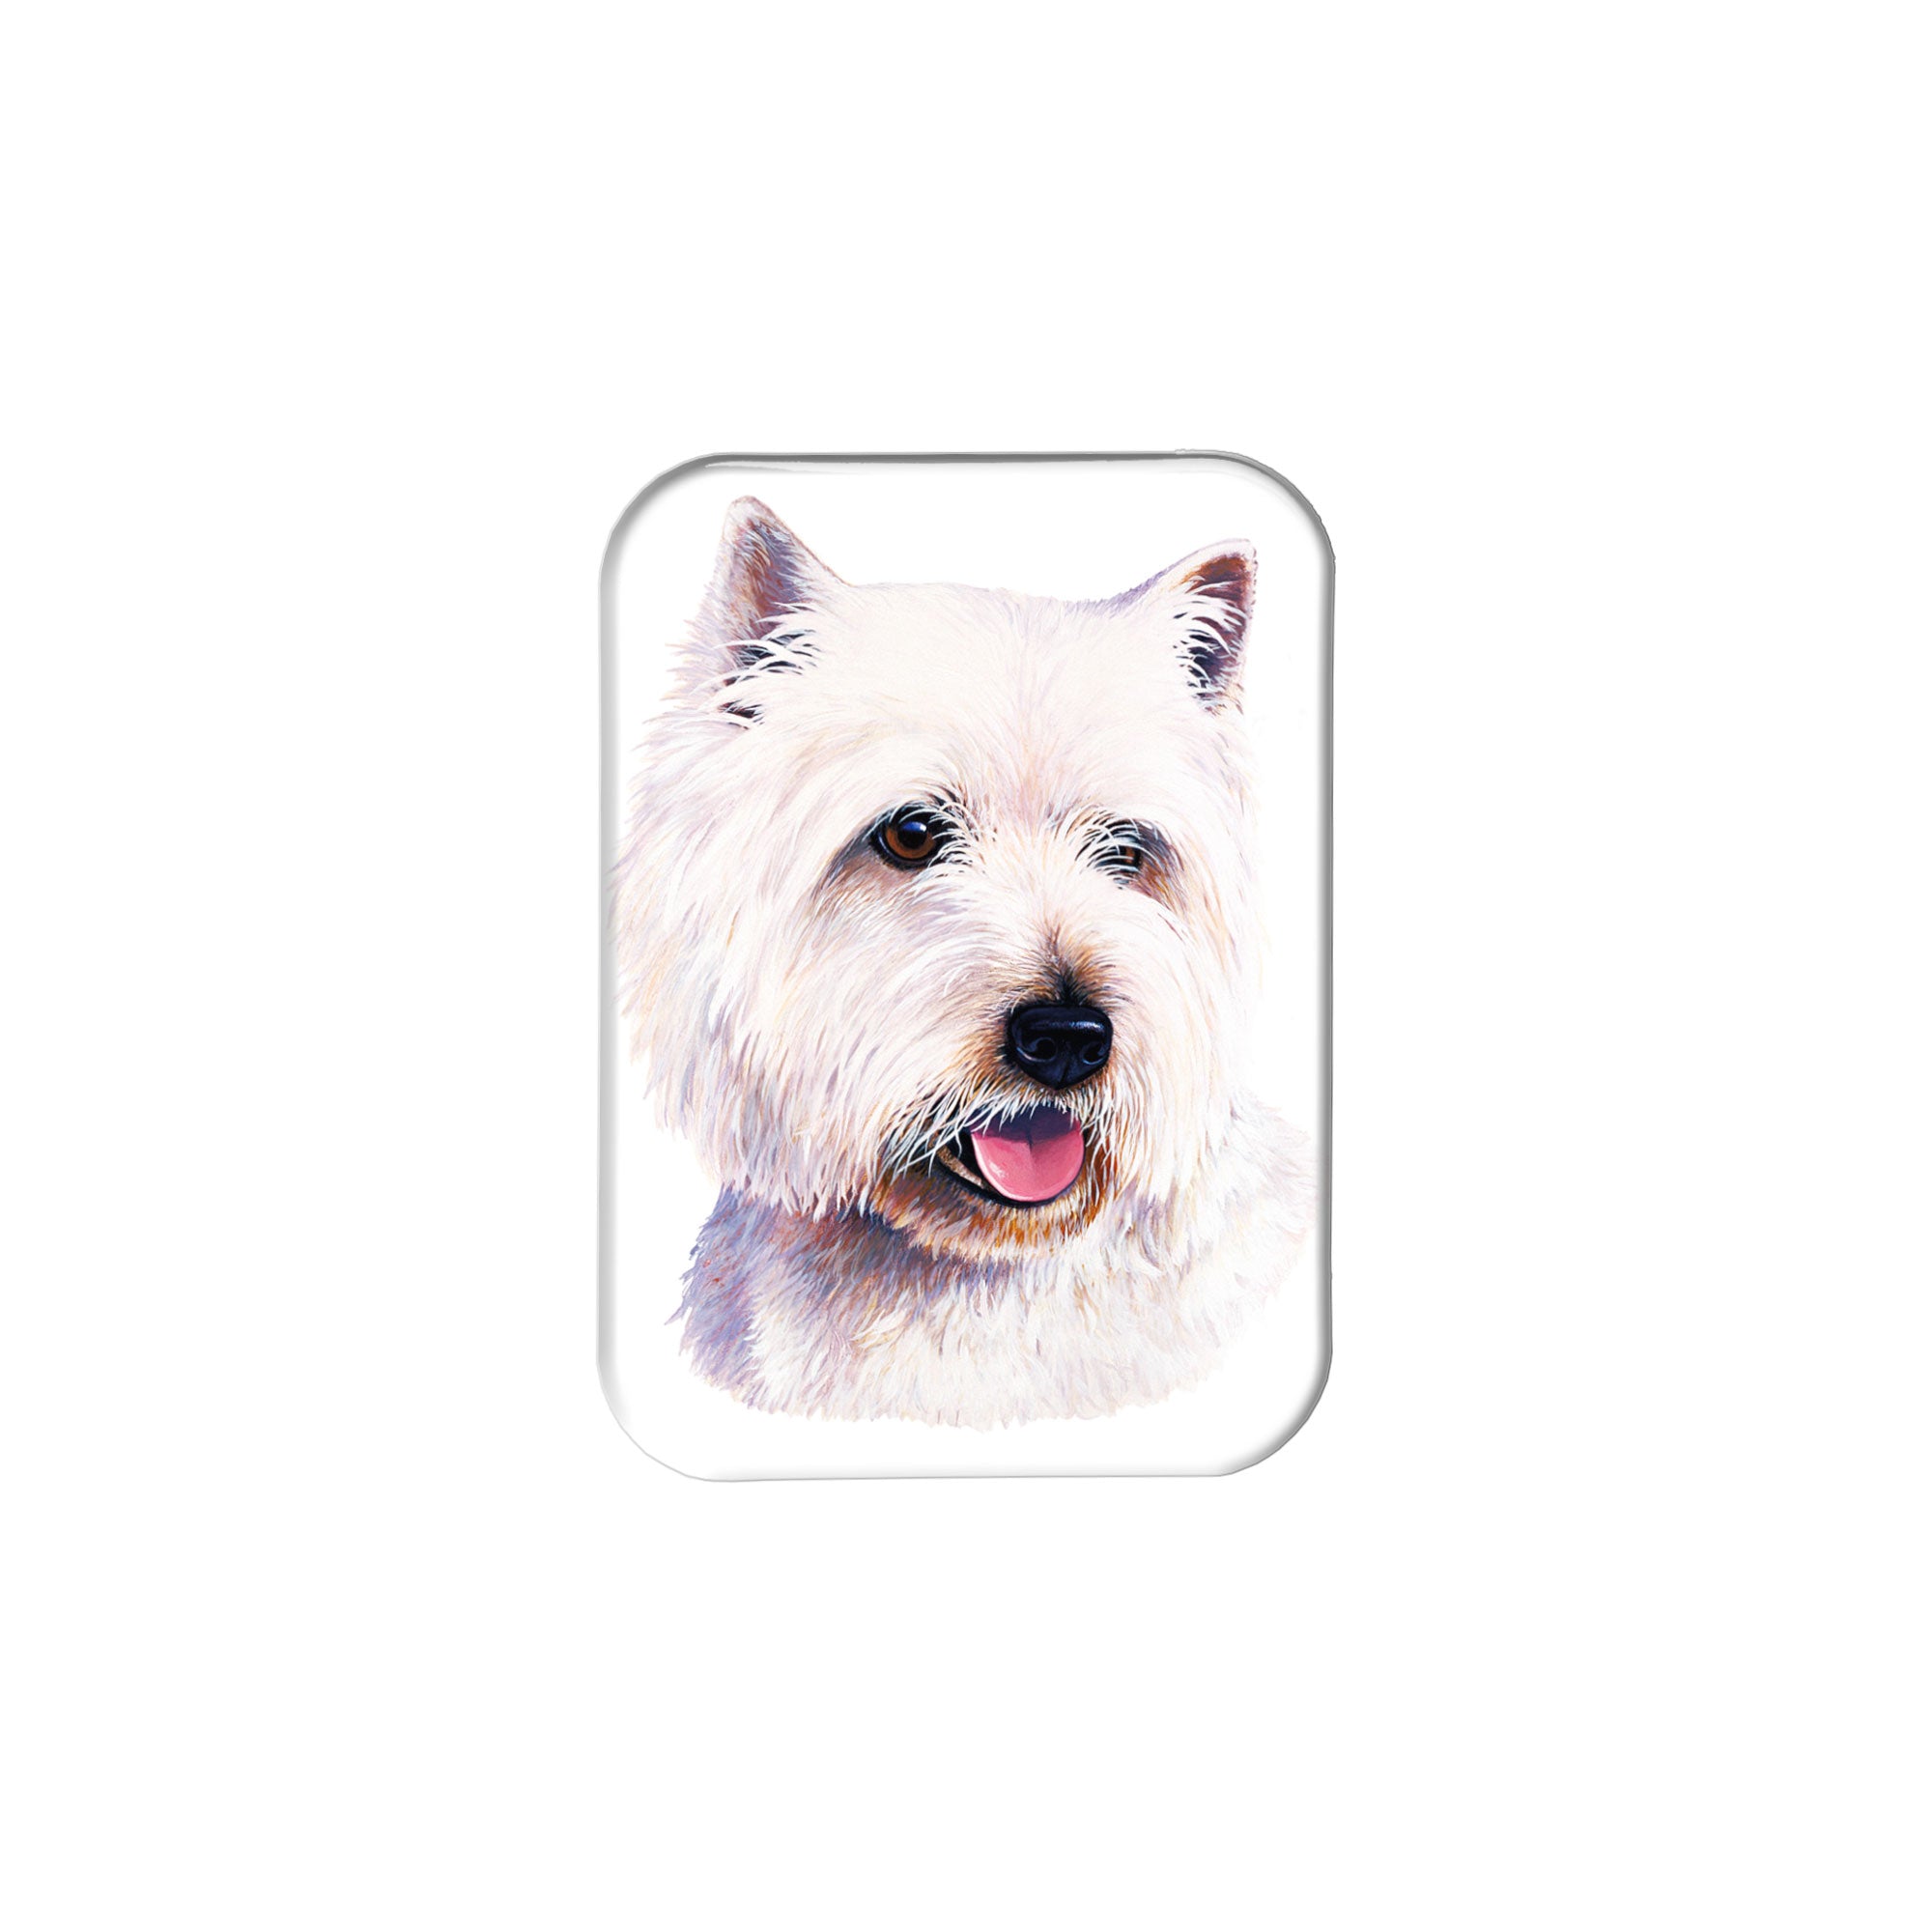 "West Hyland Terrier" - 2.5" X 3.5" Rectangle Fridge Magnets